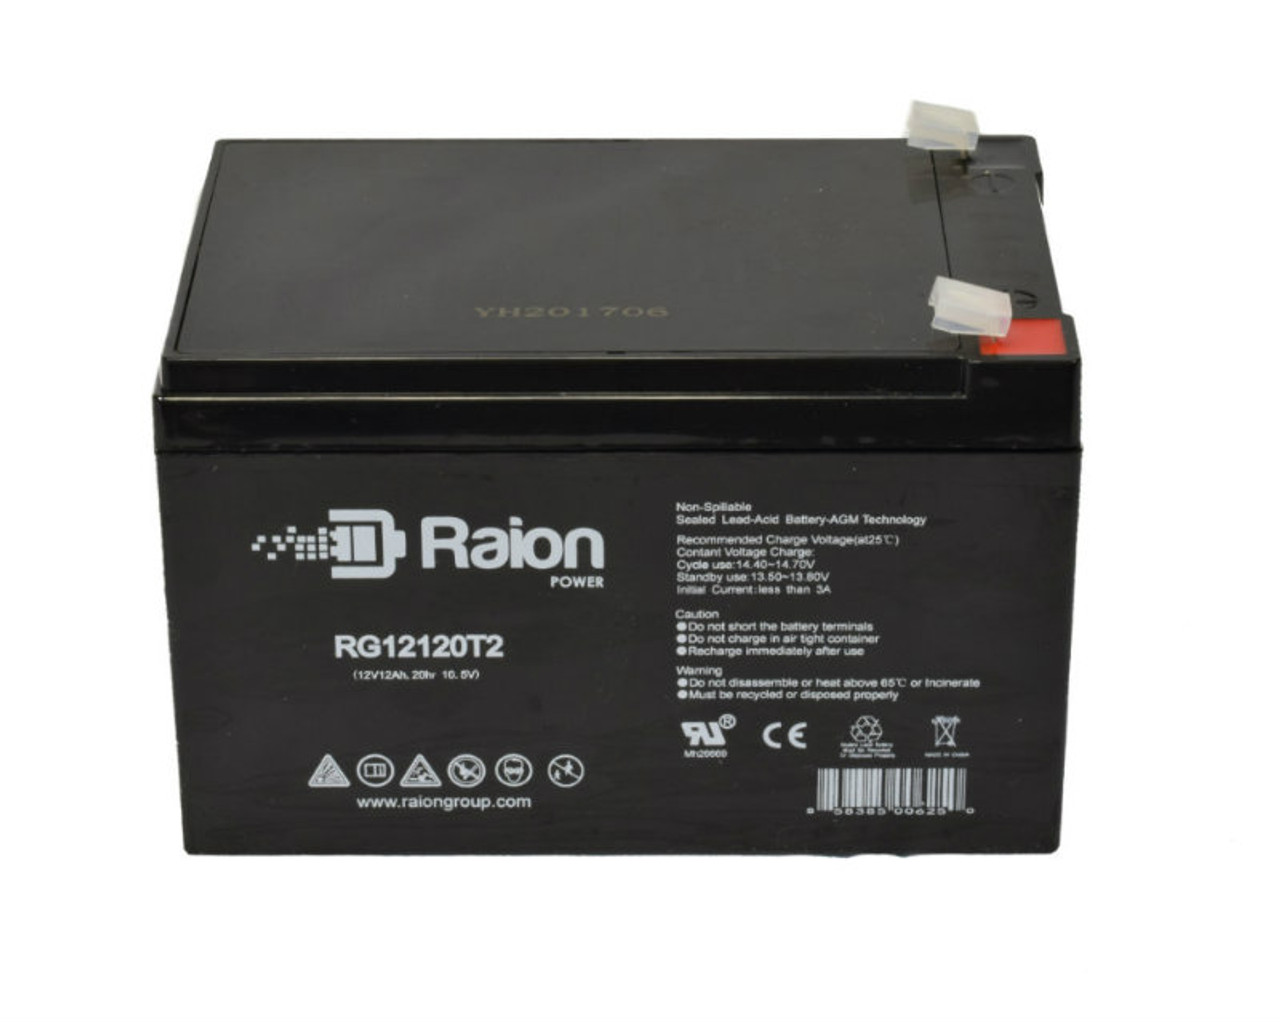 Raion Power RG12120T2 SLA Battery for Razor RSF650